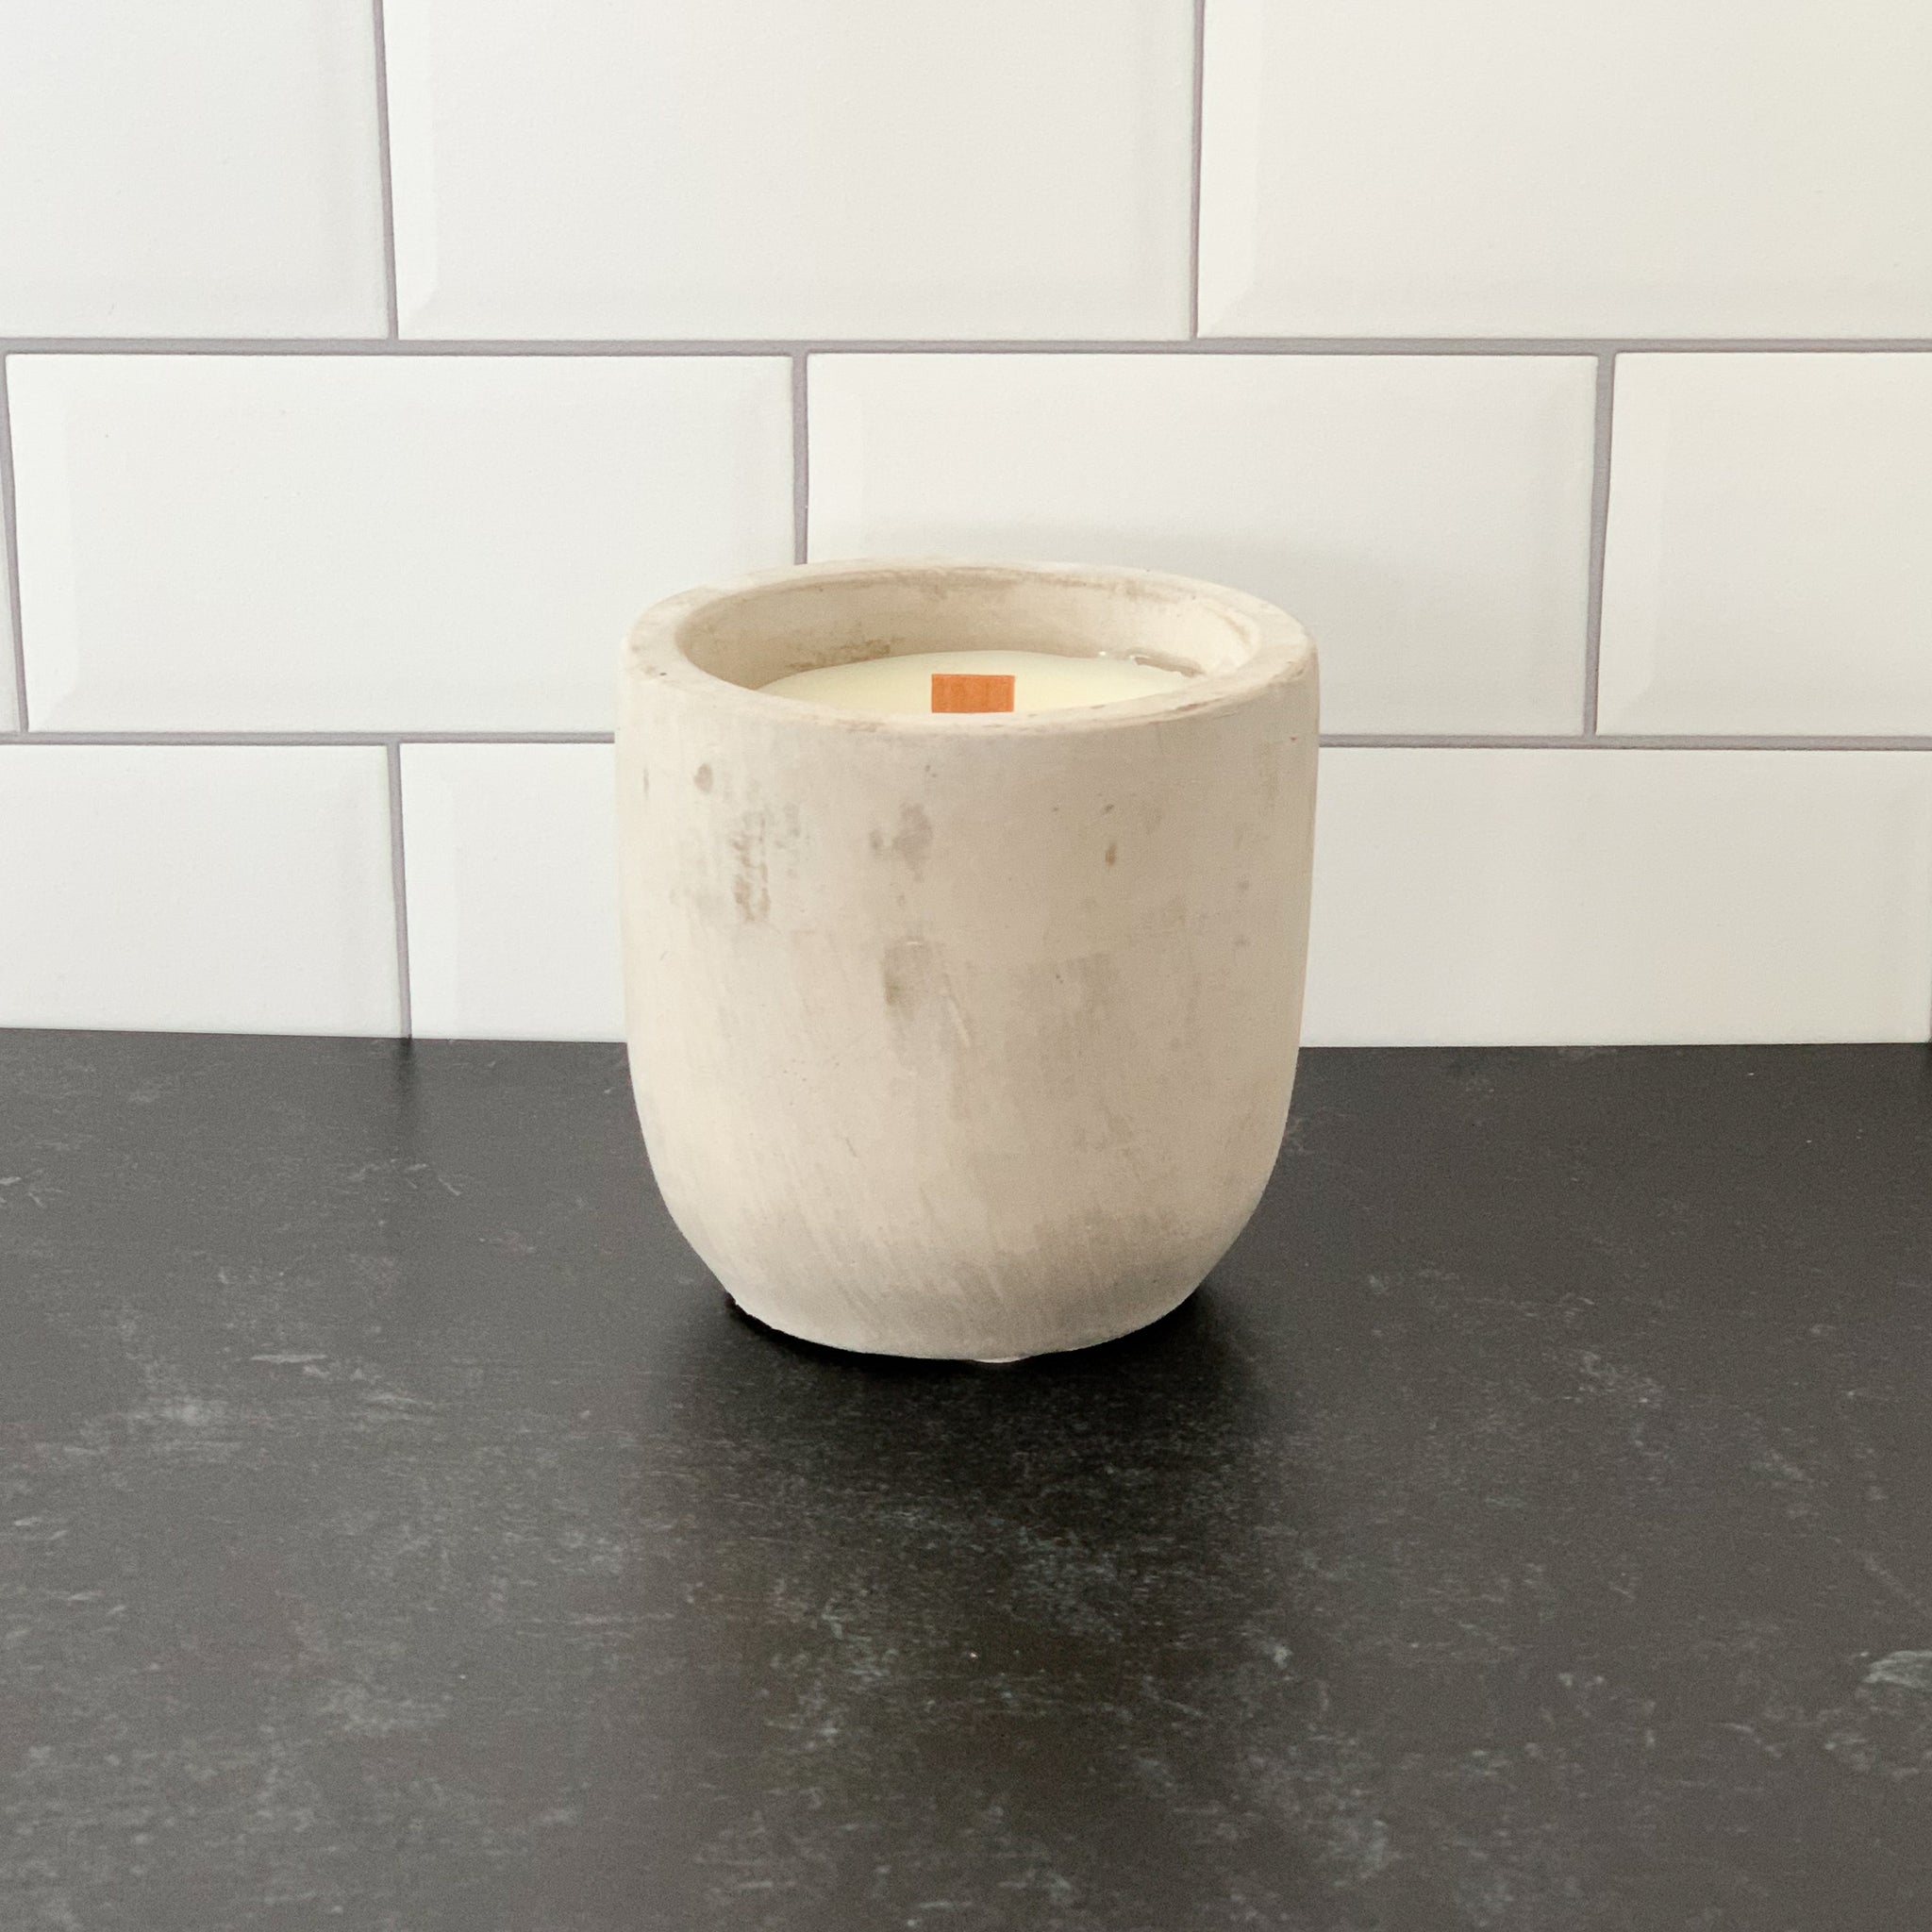 The Concrete Cup